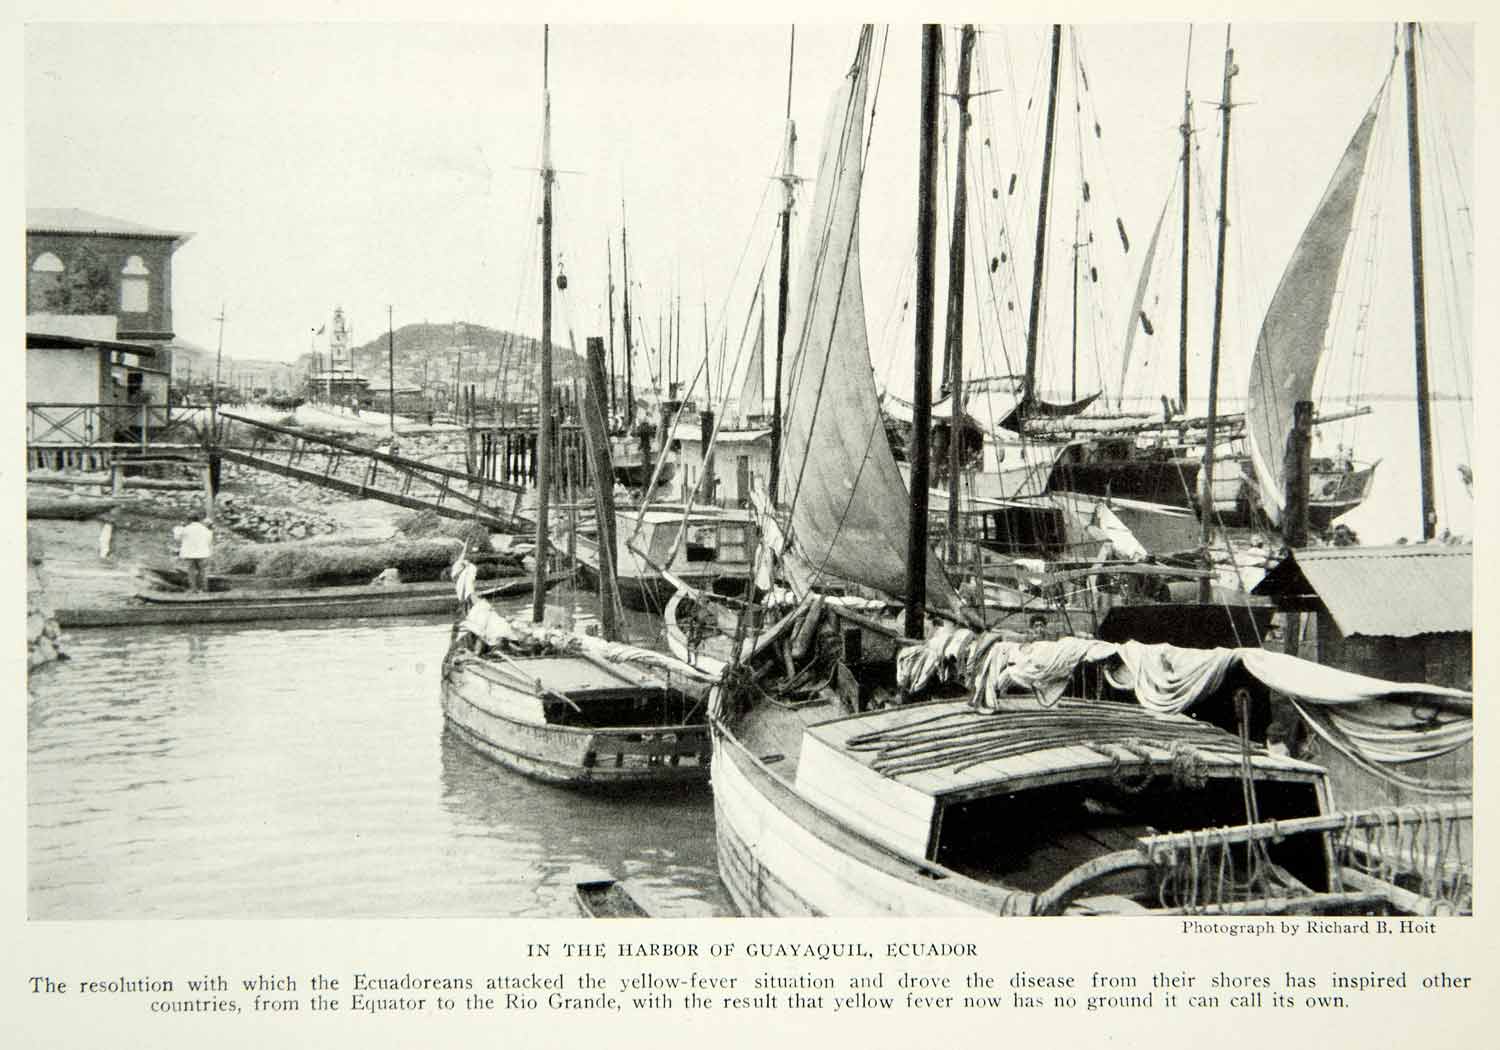 1922 Print Ecuador Guayaquil Harbor Boats Sails Docks Nautical Historical NGM8